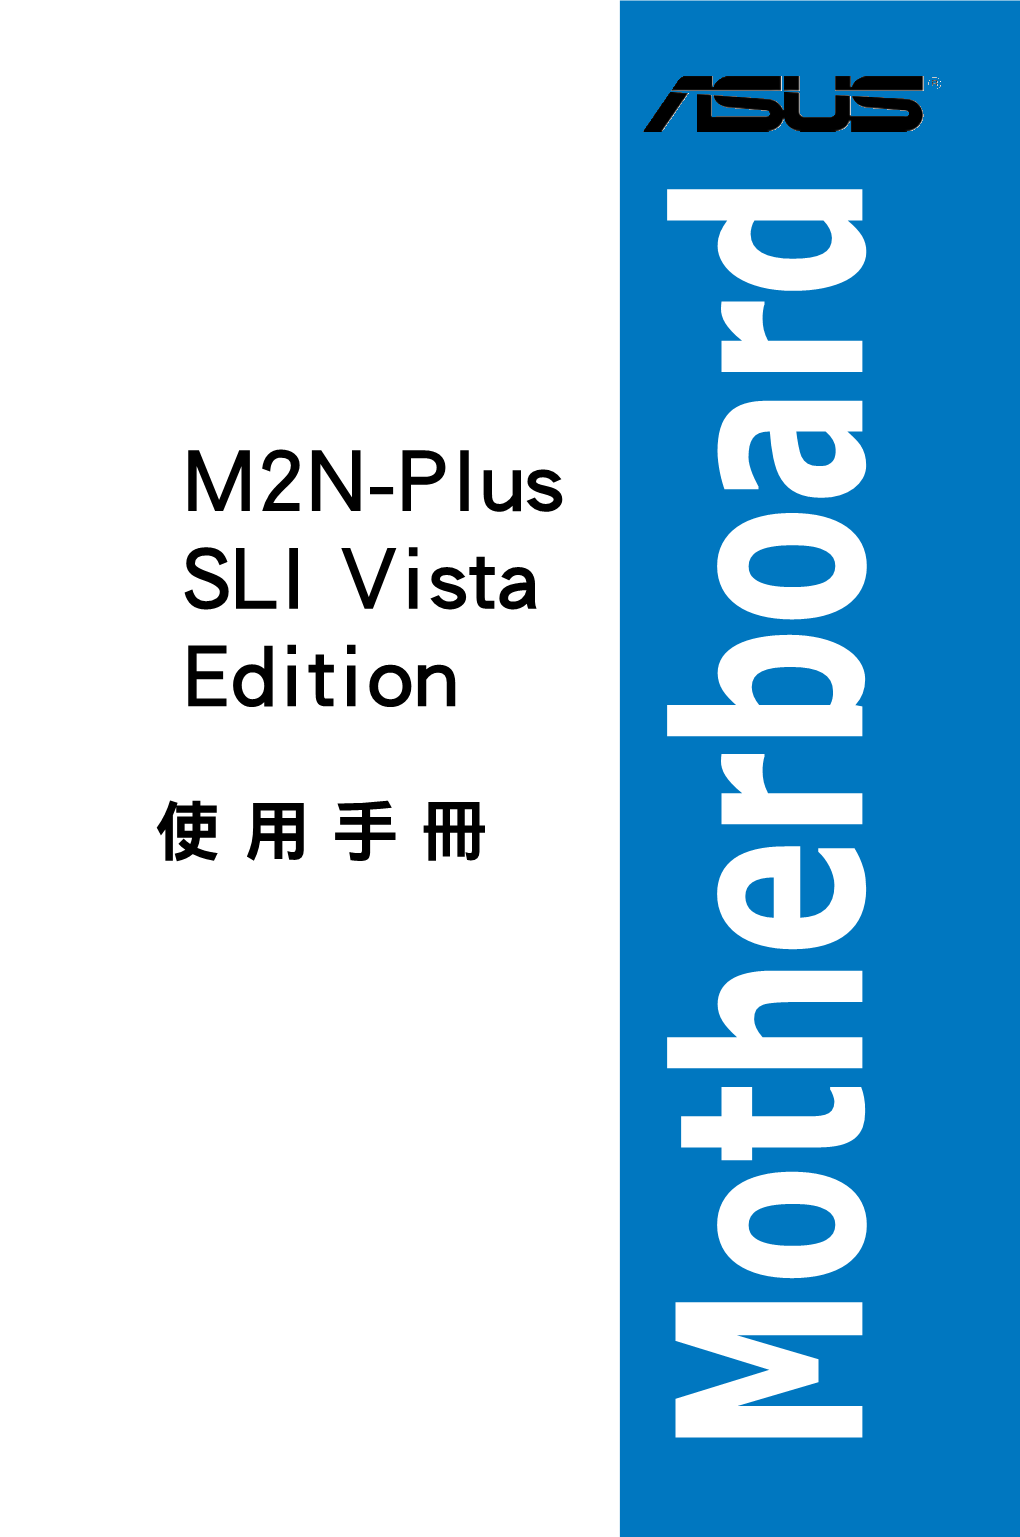 M2N-Plus SLI Vista Edition 規格列表